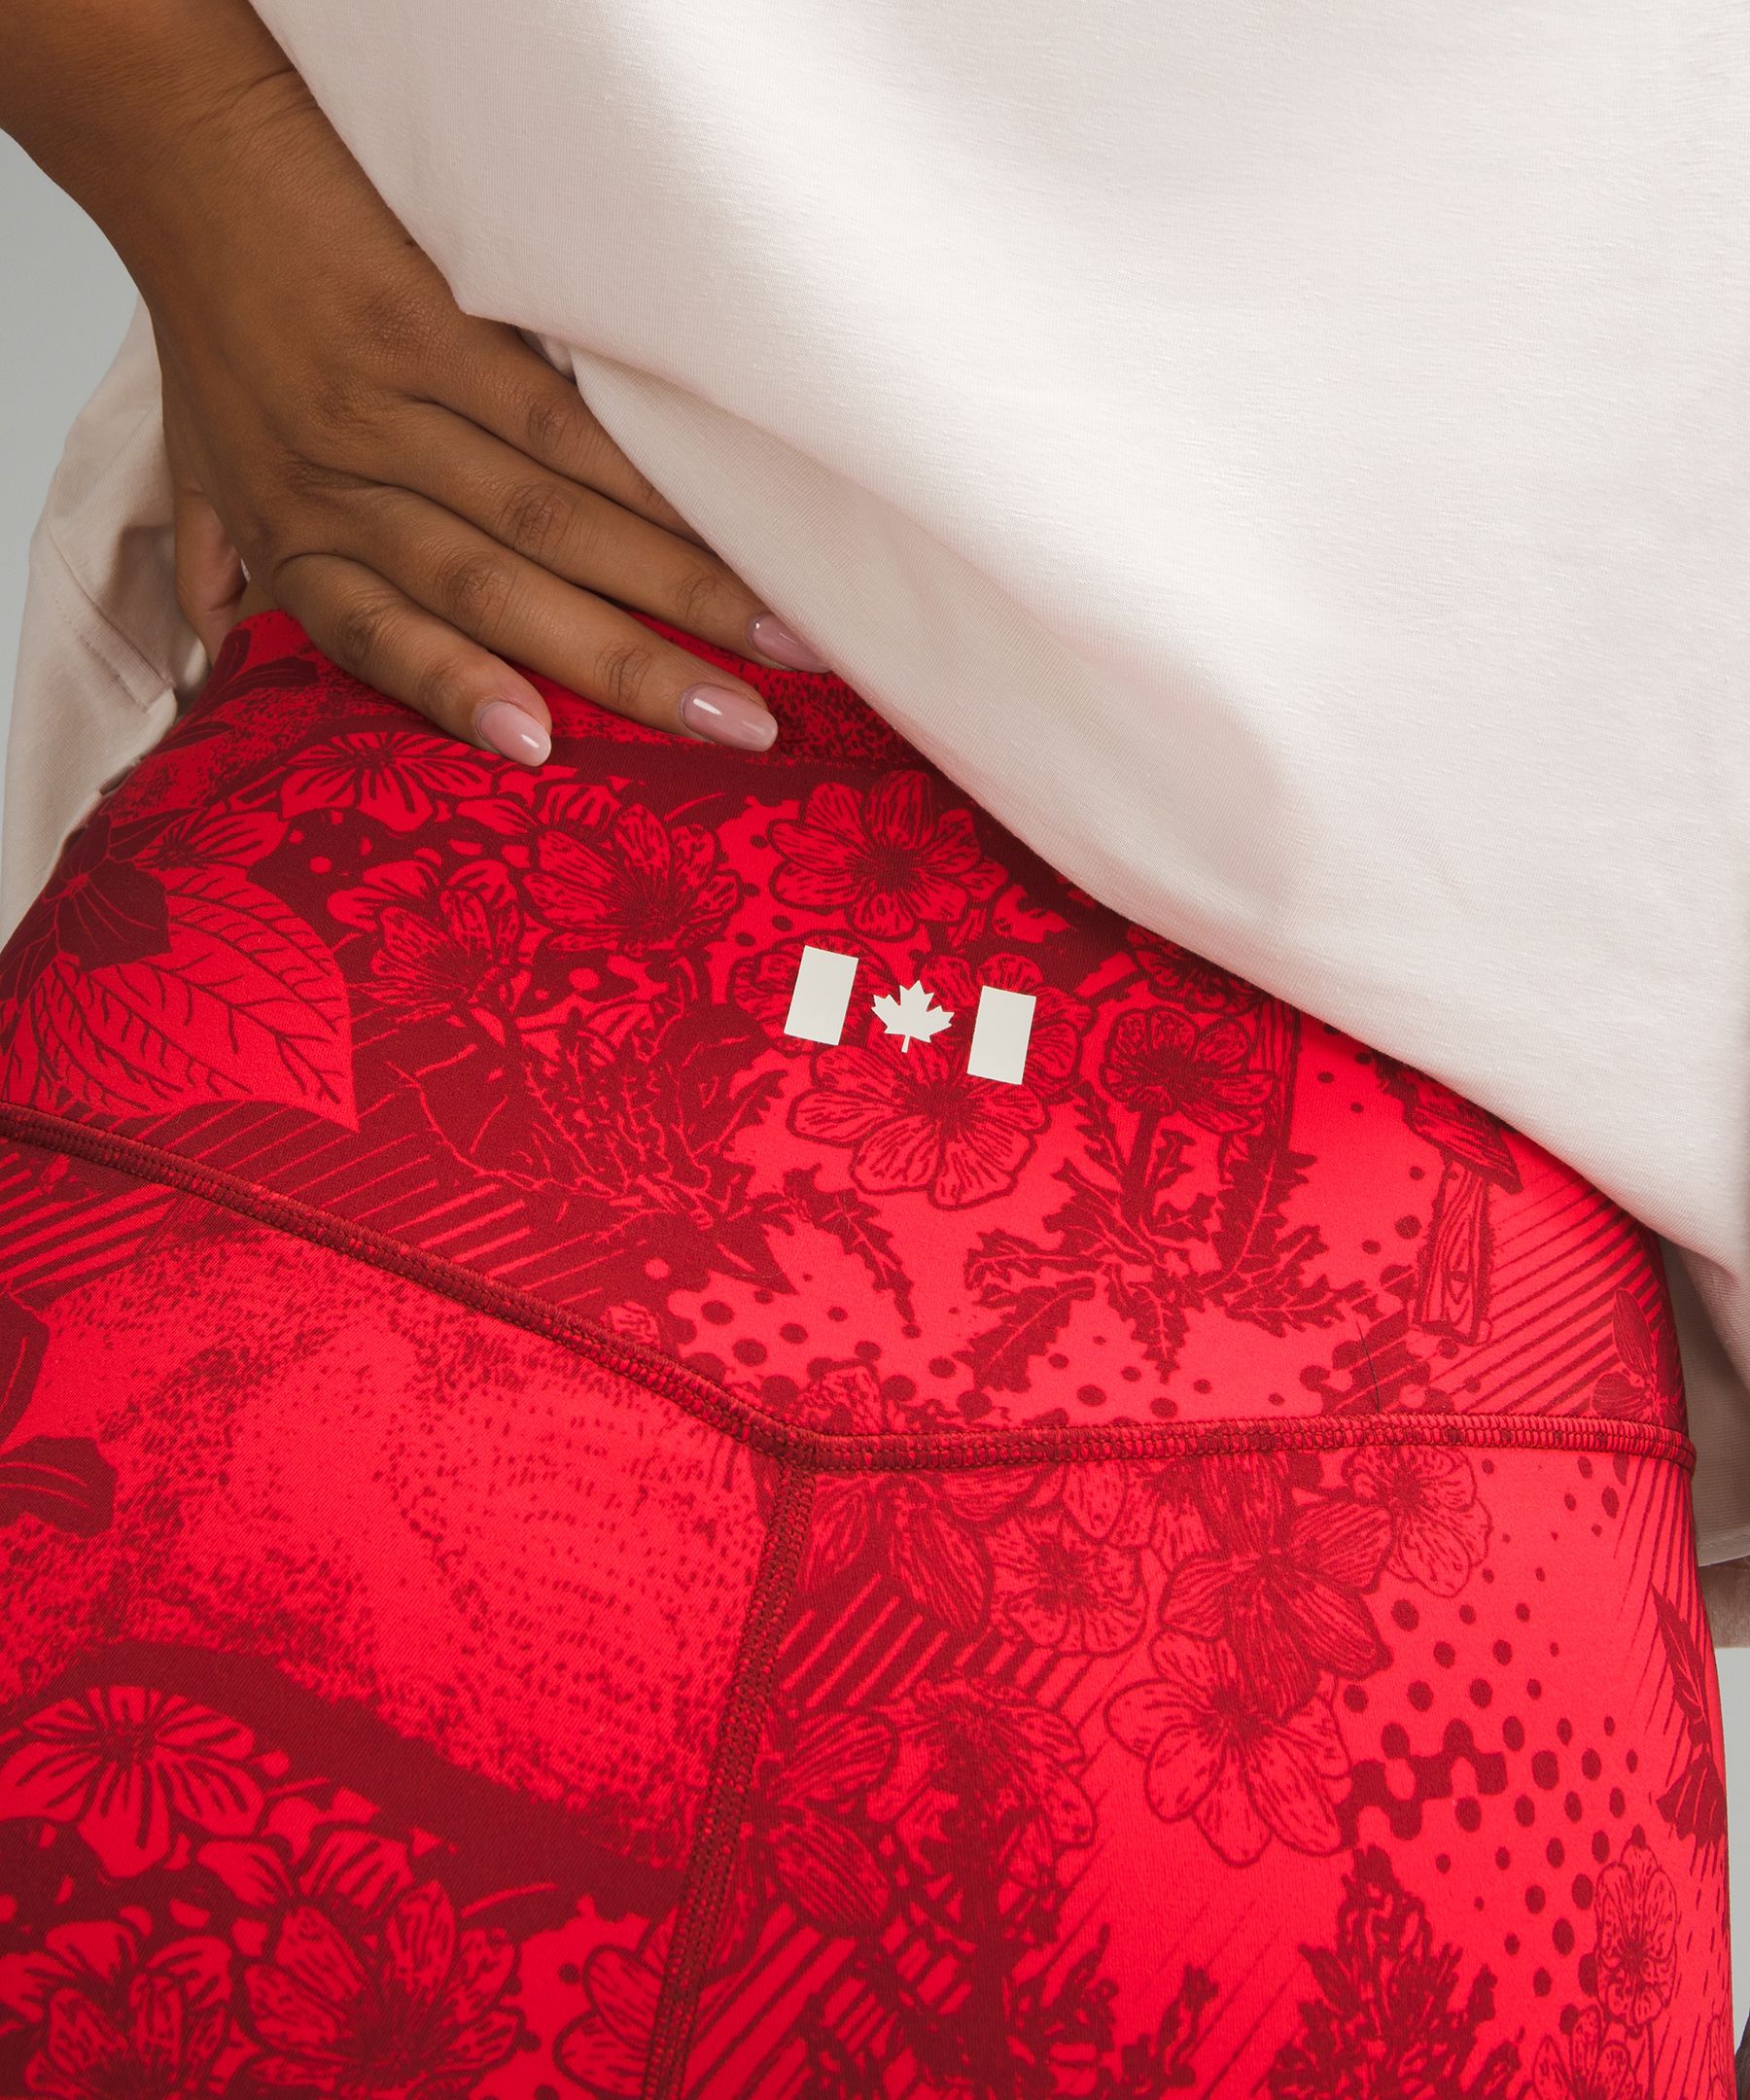 Team Canada lululemon Align™ High-Rise Short 6" *COC Logo | Women's Shorts